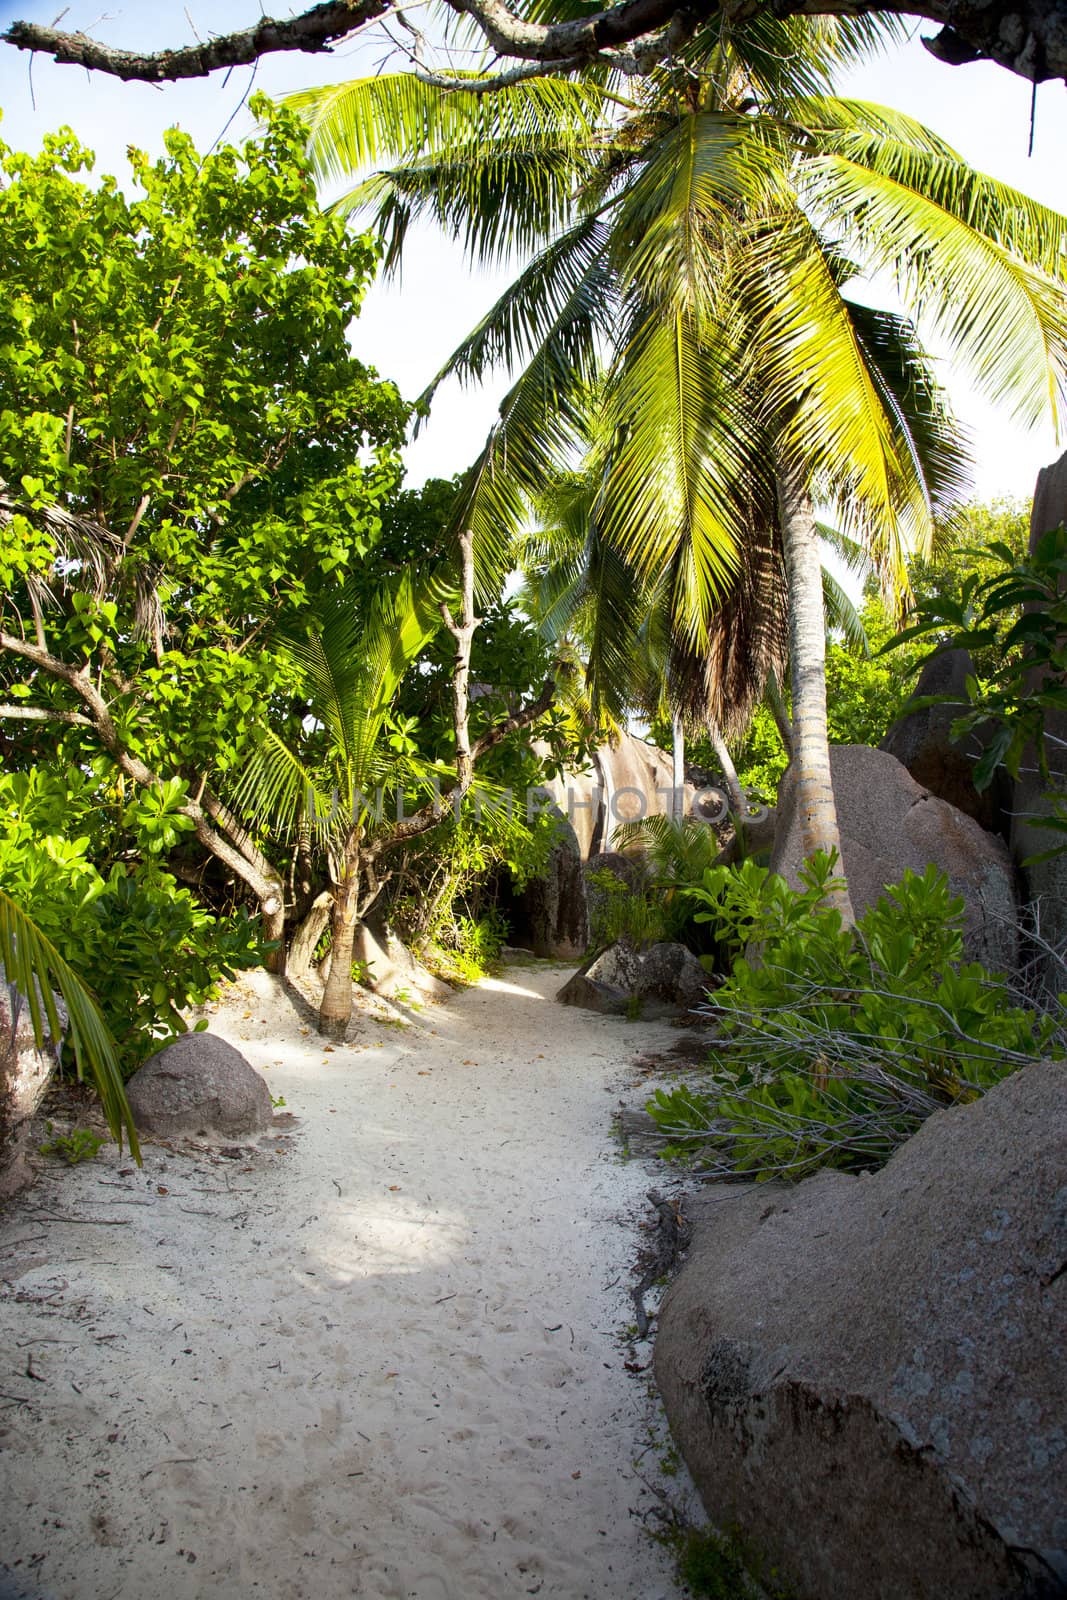 Sandy beach path leading past rocks and lush tropical vegetation to a palm tree